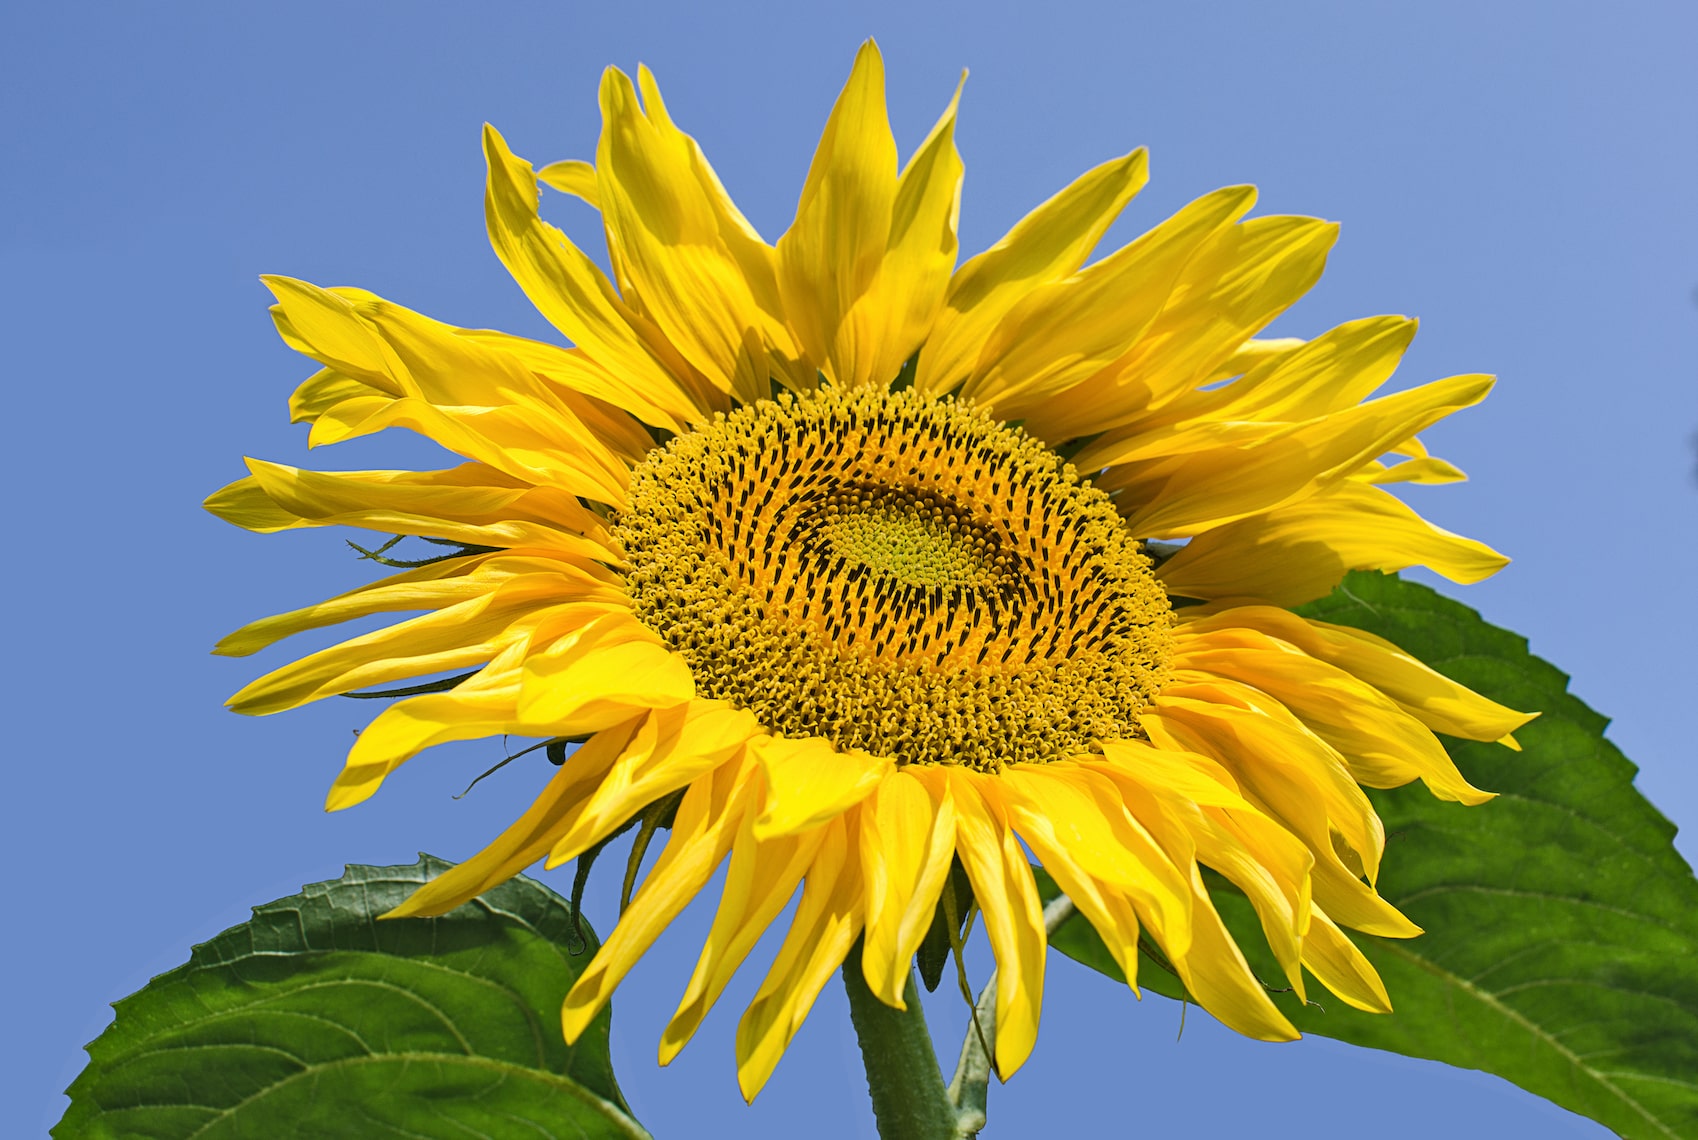 Sunflower and sunflower lecithin